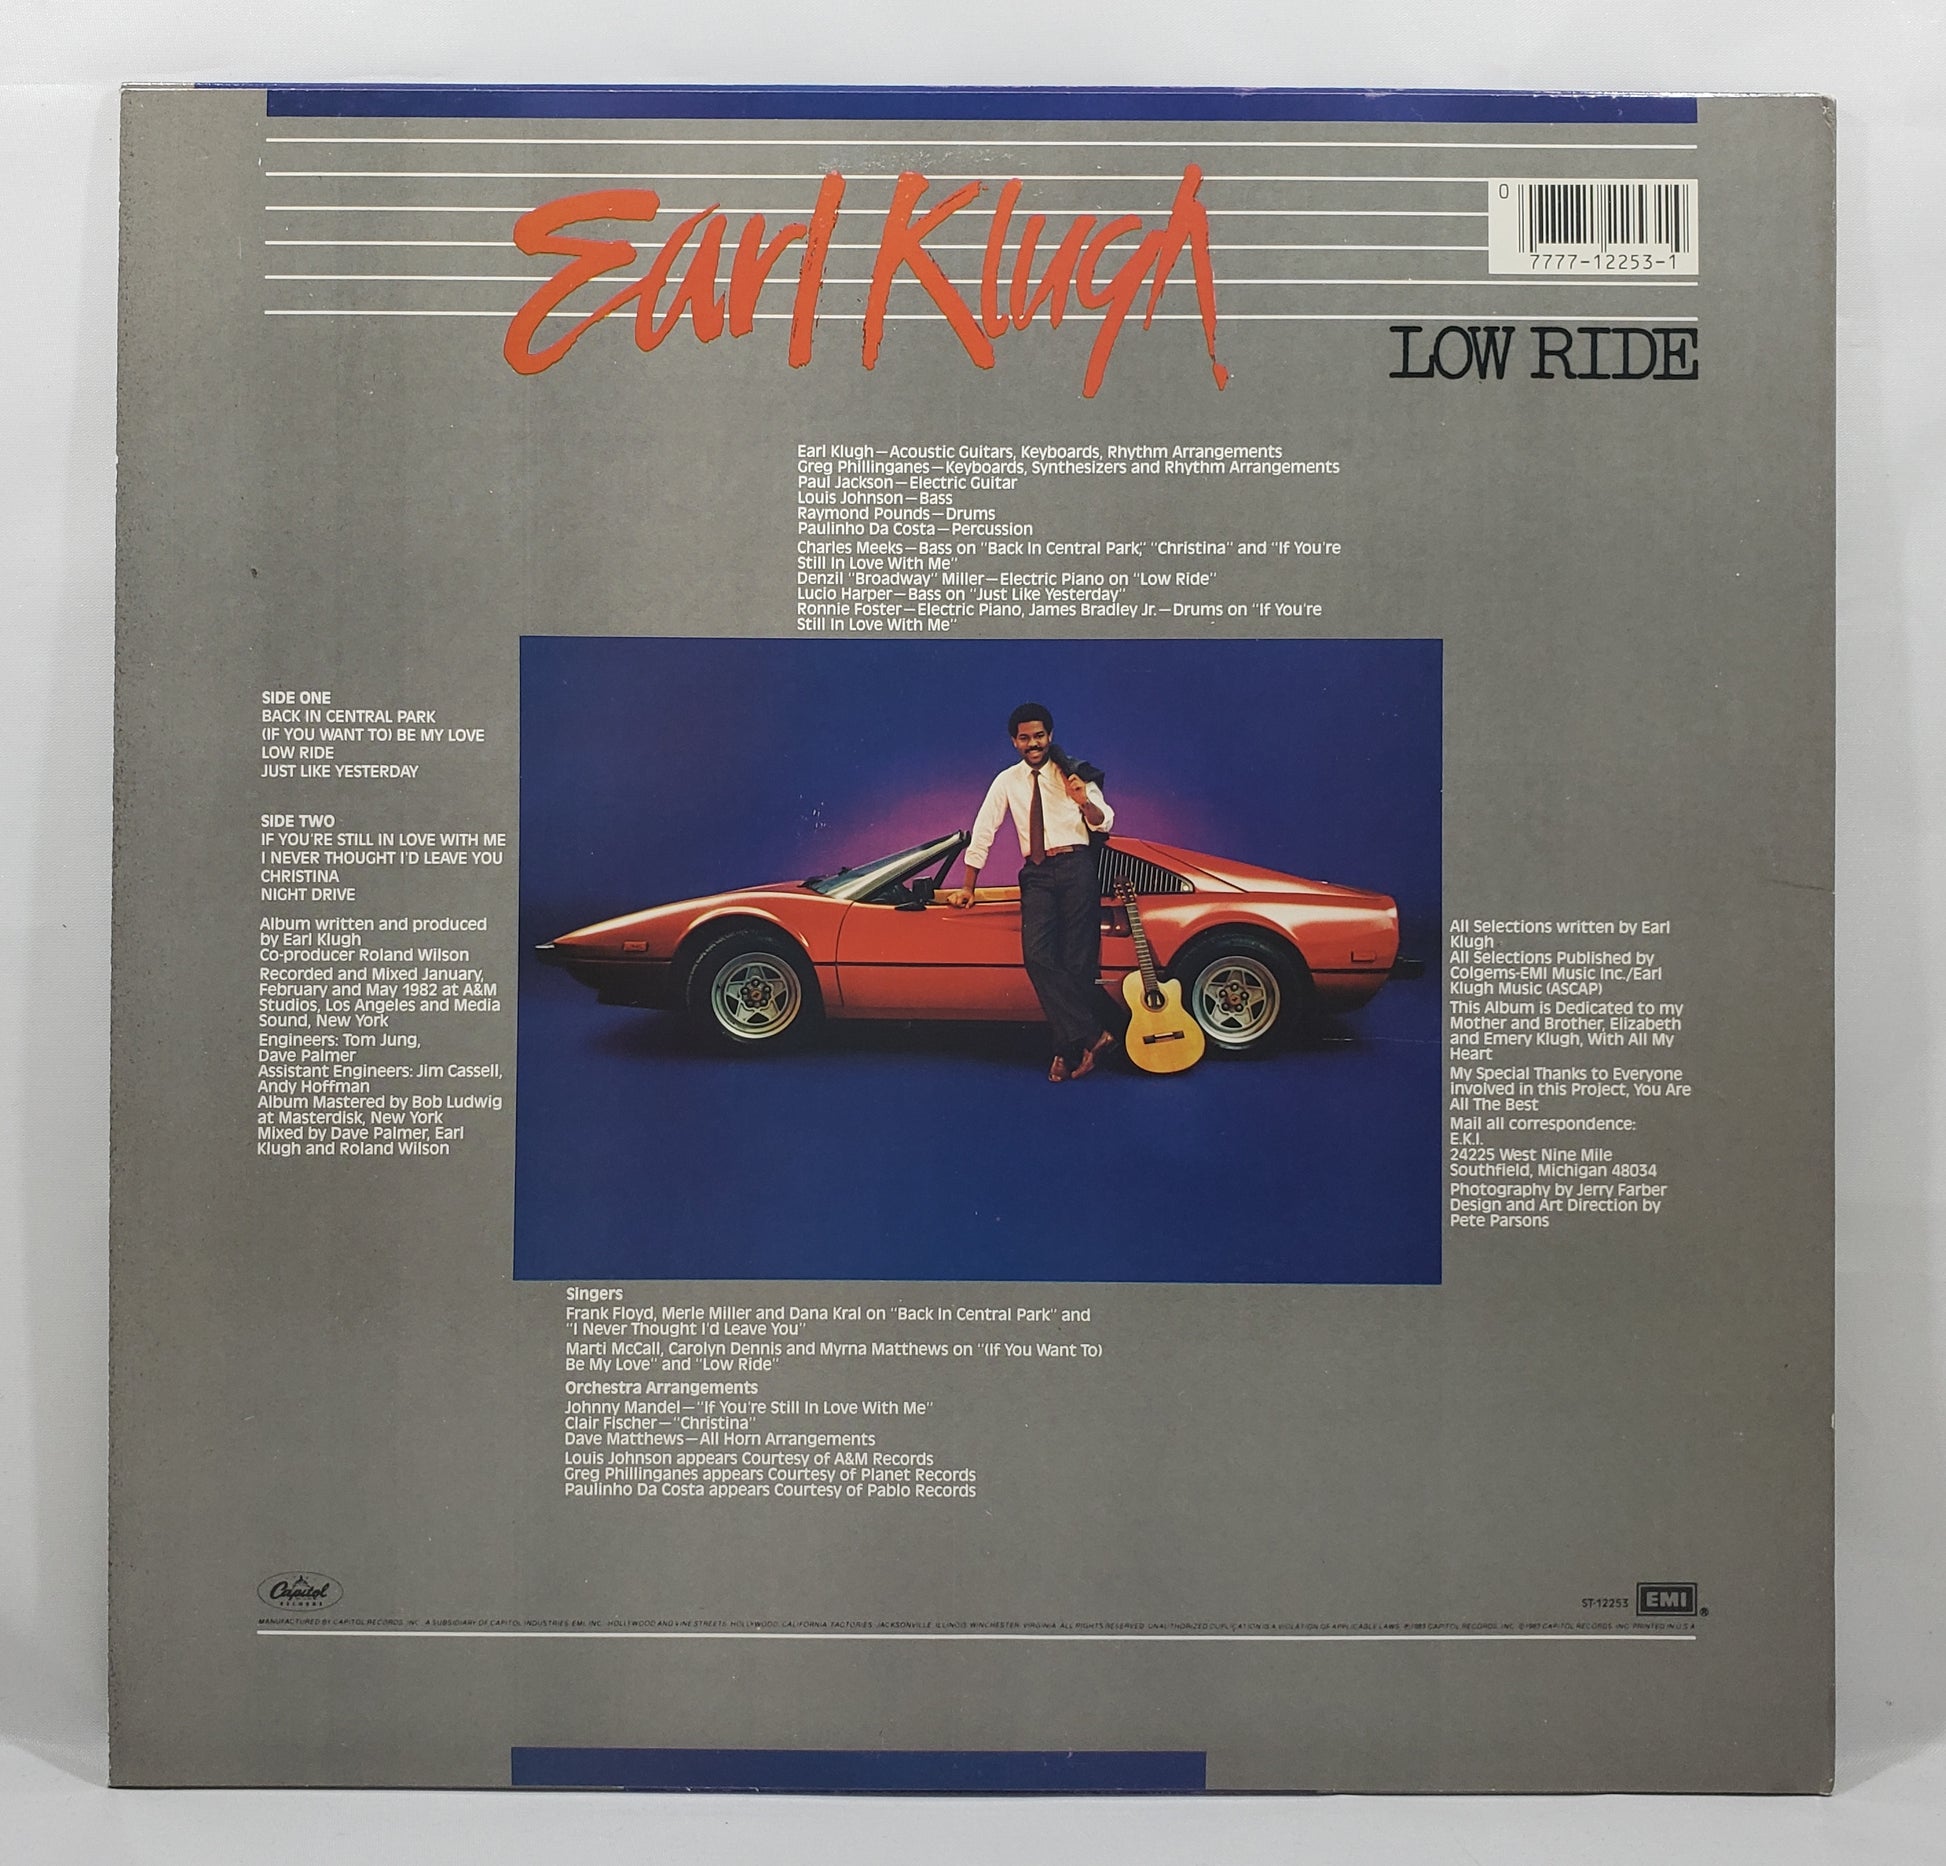 Earl Klugh - Low Ride [1983 Jacksonville Pressing] [Used Vinyl Record LP]